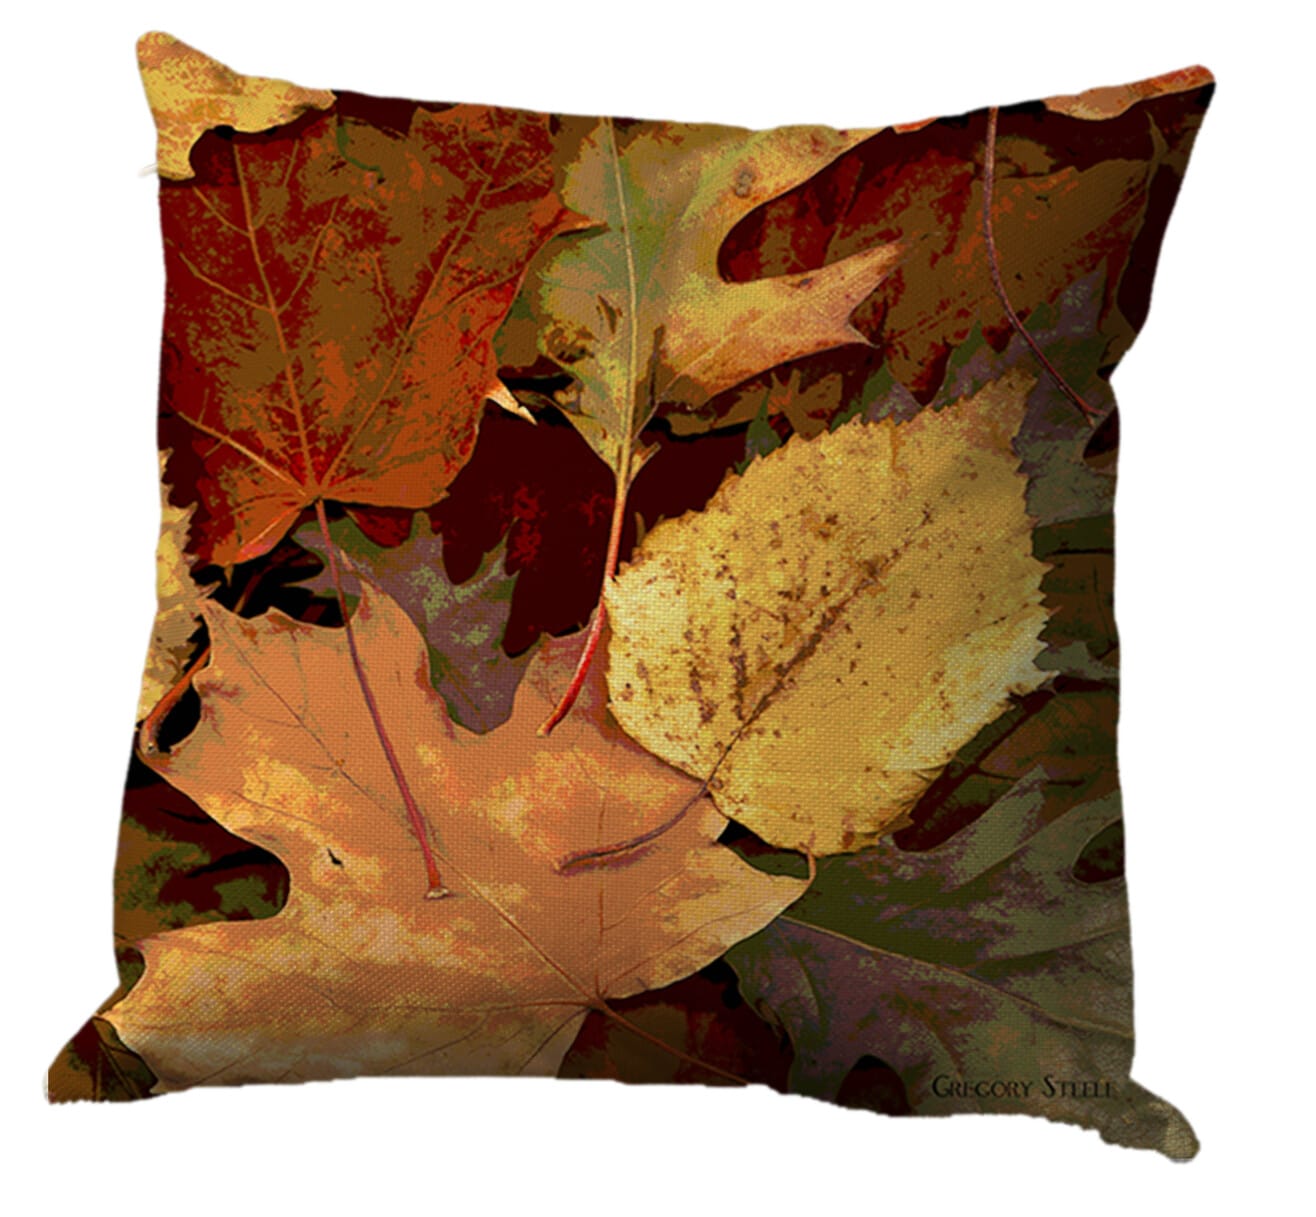 https://madeinmichigan.com/wp-content/uploads/2023/02/Nature-Wildlife-Decorative-Throw-Pillows-Fall-Leaves.jpg